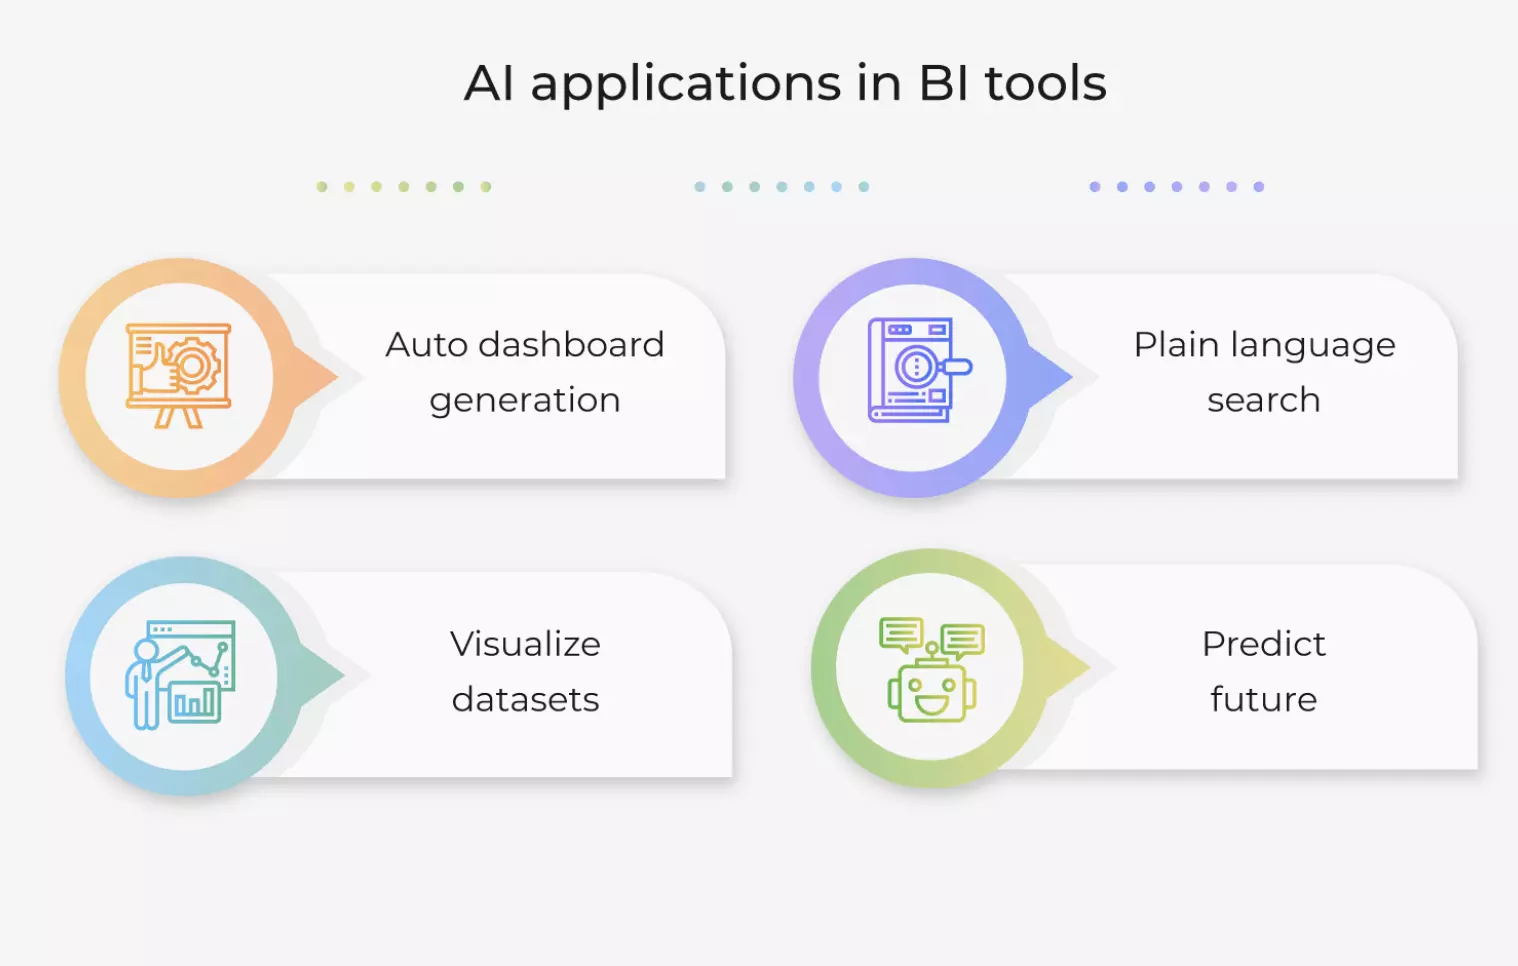 Applications_of_AI_in_BI_tools.png